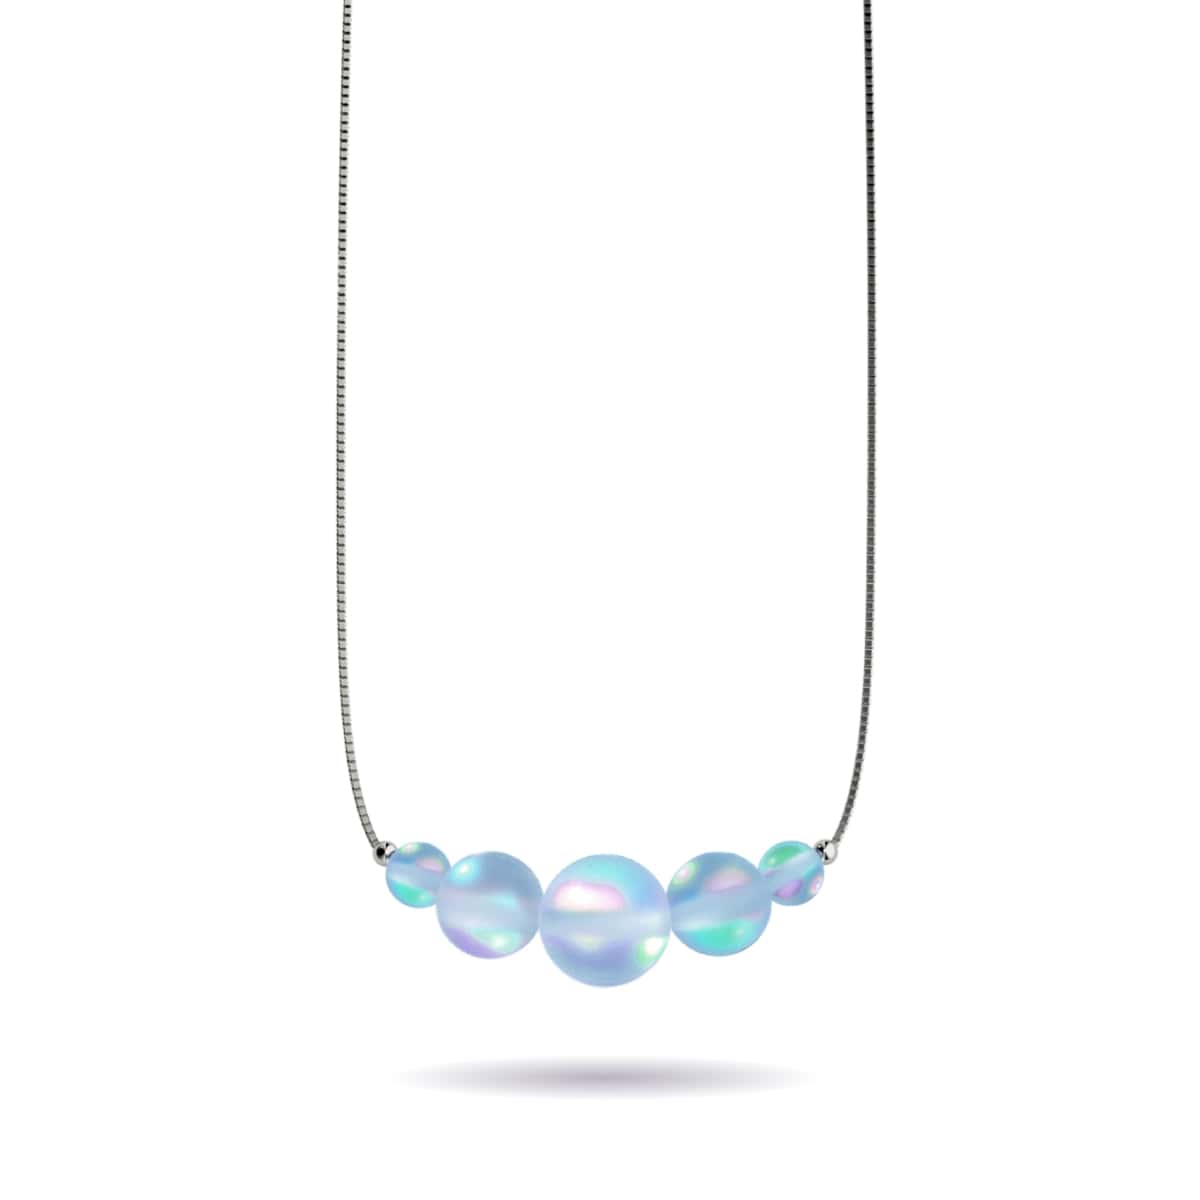 Whale Tail Glass Bead Bracelet - Nautical Beach Ocean Jewelry - Handmade Beaded Bracelets for Women - Fiona - BR2824C